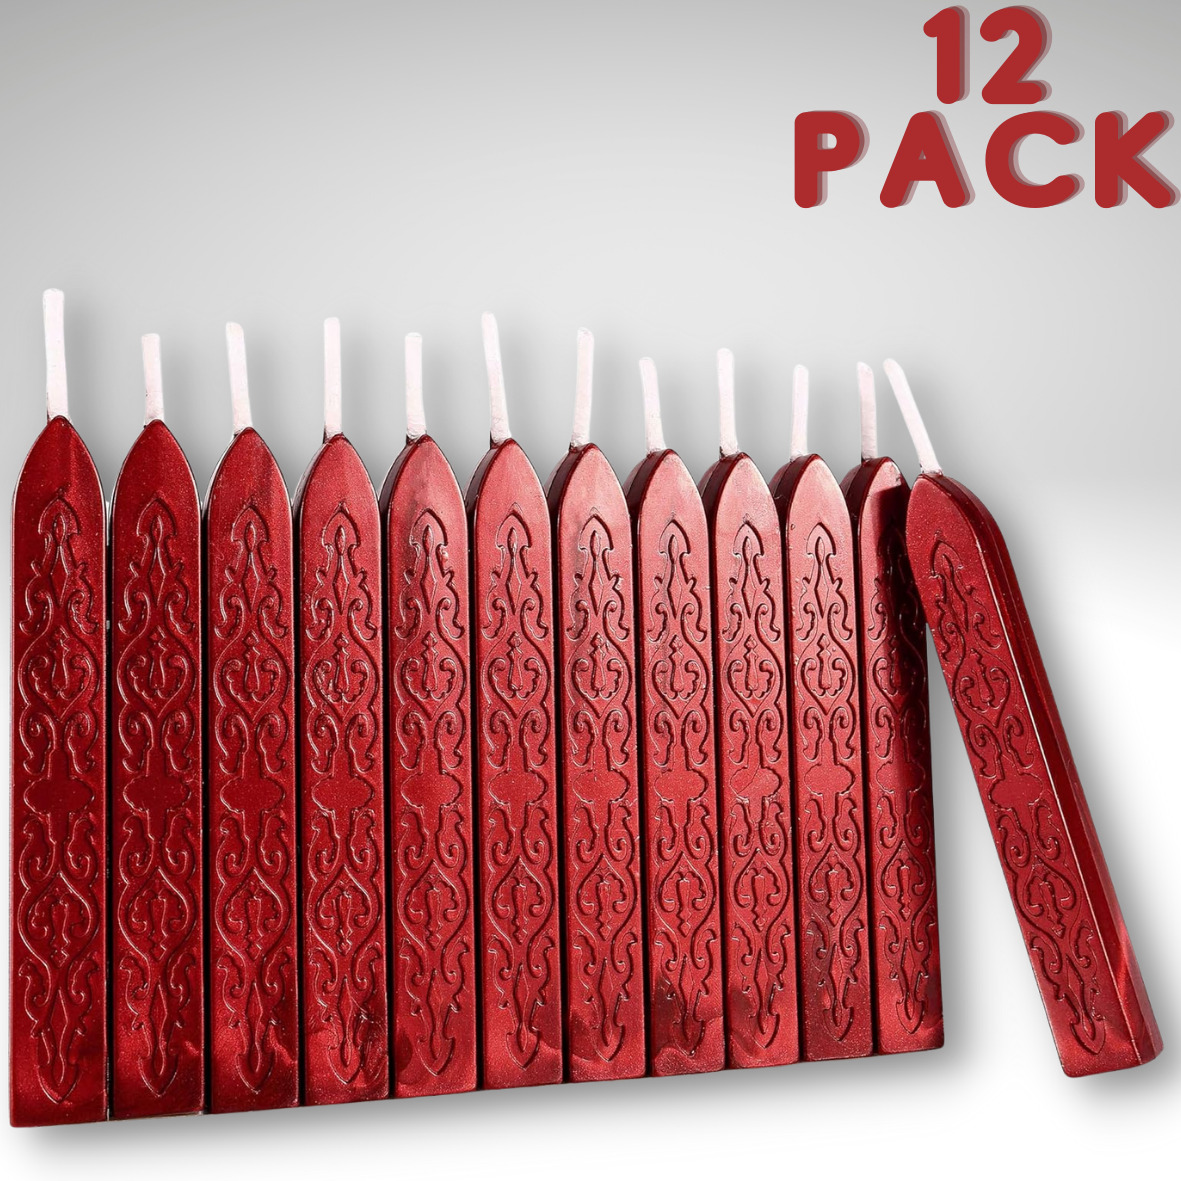 Mornajina 12 Pieces Metalic Red Sealing Wax Stick for Sealing with Wicks